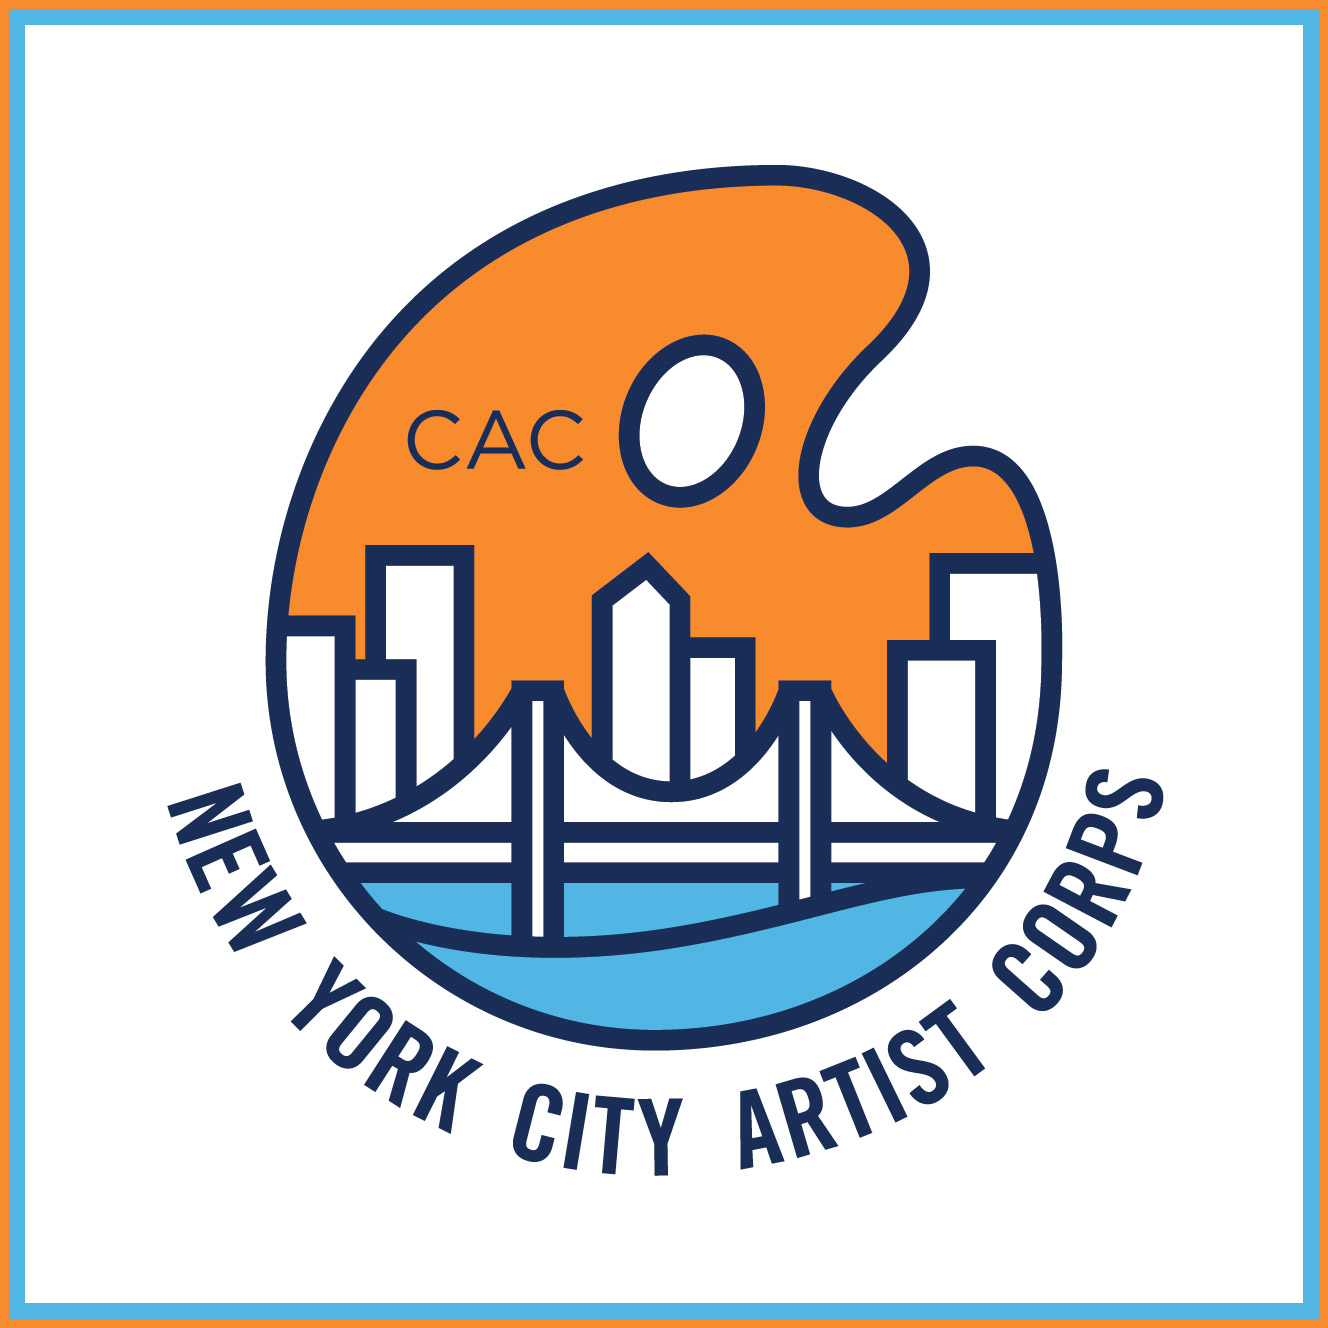 New York City Artist Corps